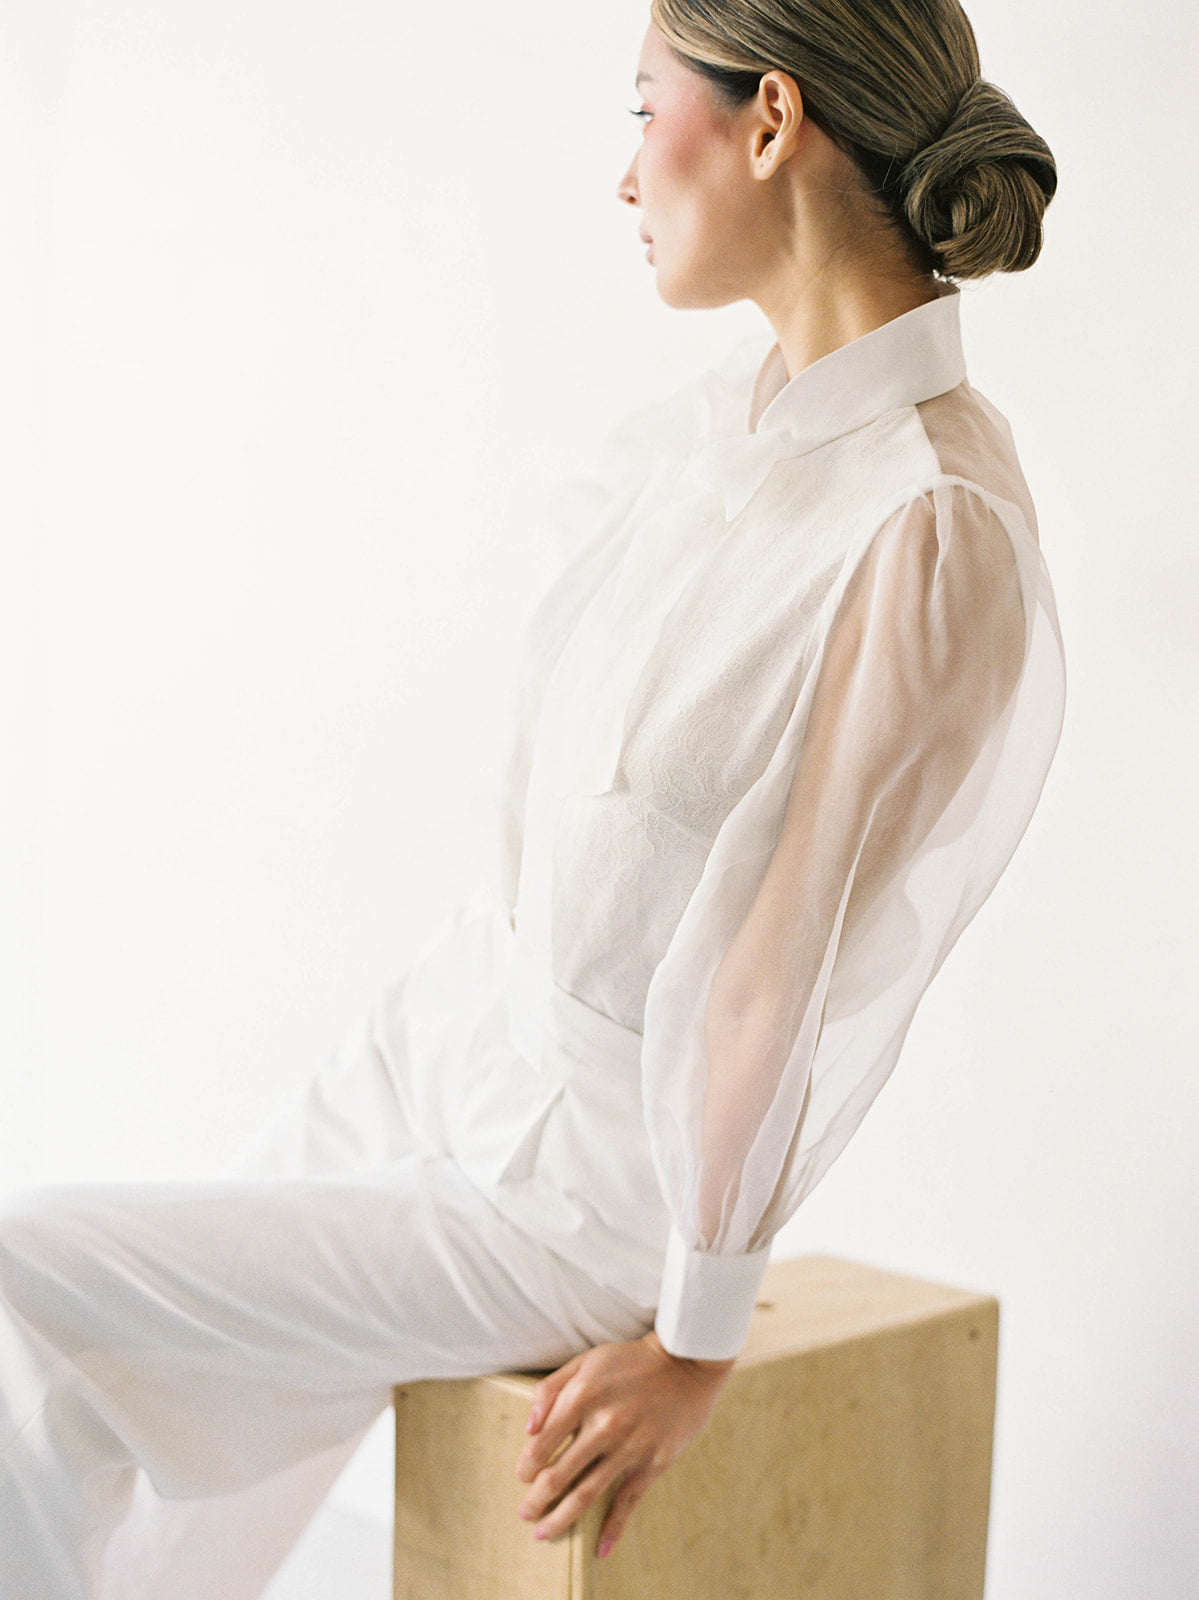 Helen Bespoke Pantsuit | Modern White Cheongsam Pantsuit